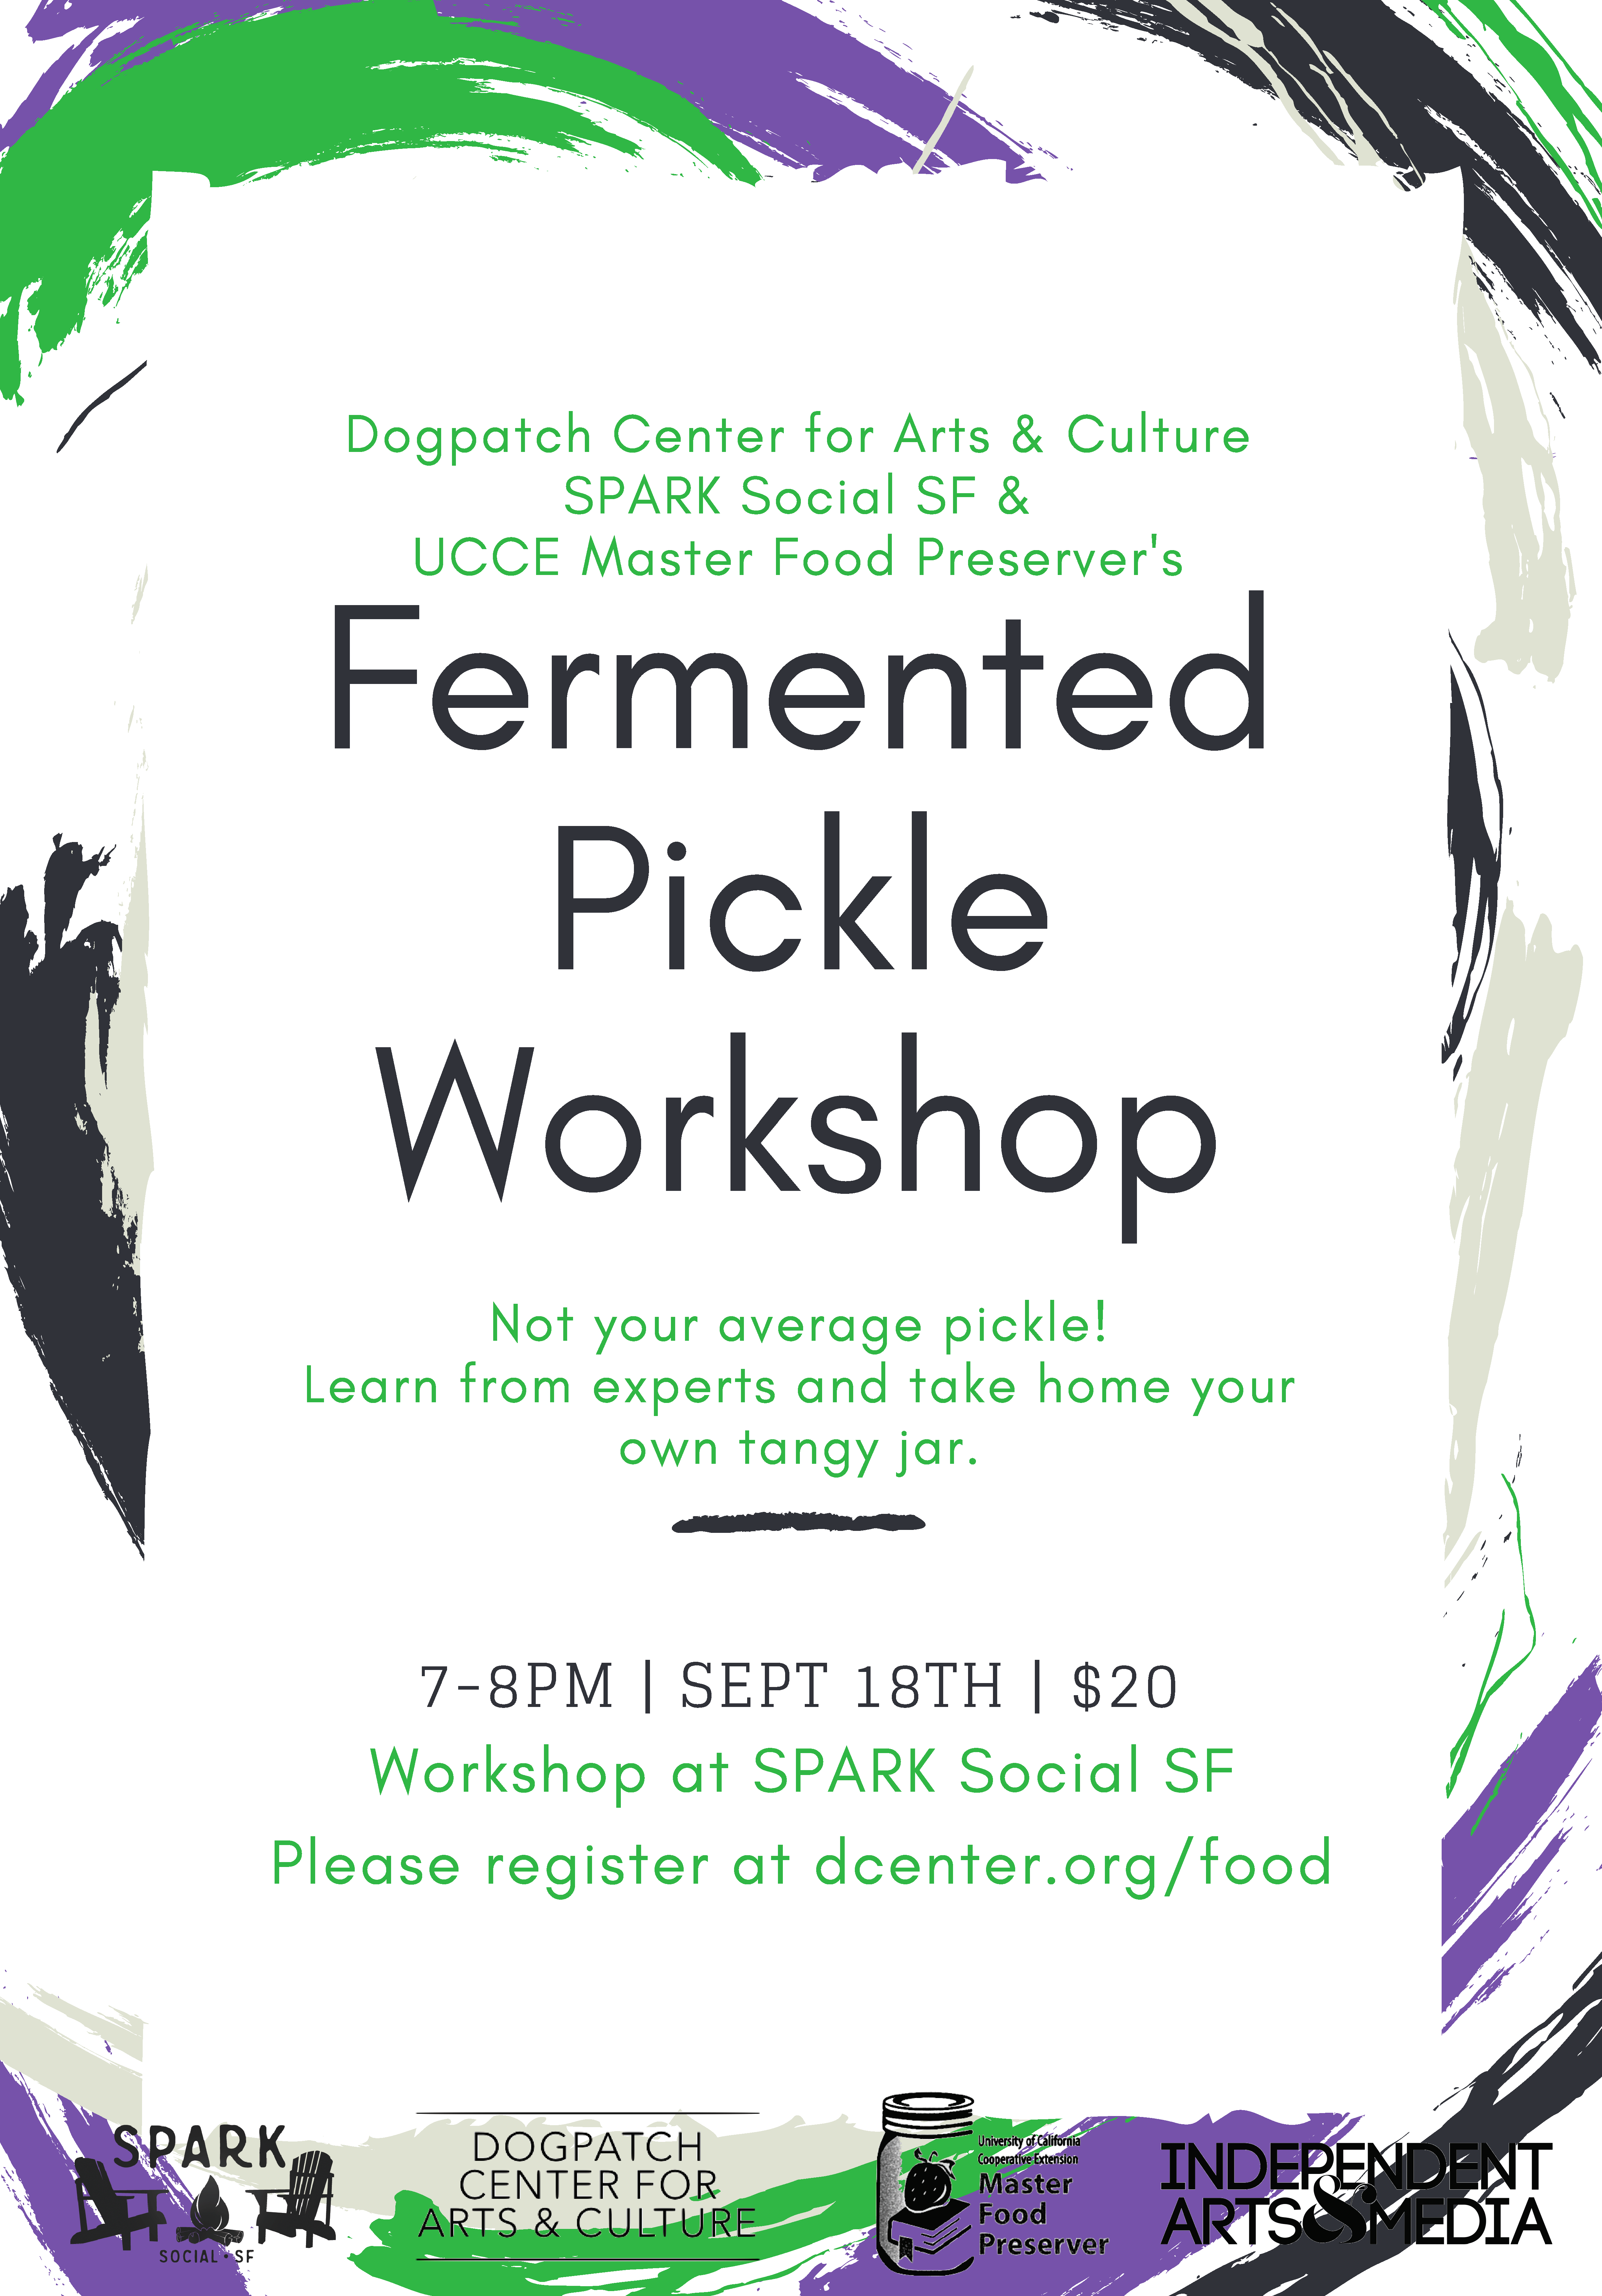 Fermented Pickle Workshop at SPARK Social SF by Dogpatch Center for Arts & Culture, September 2017